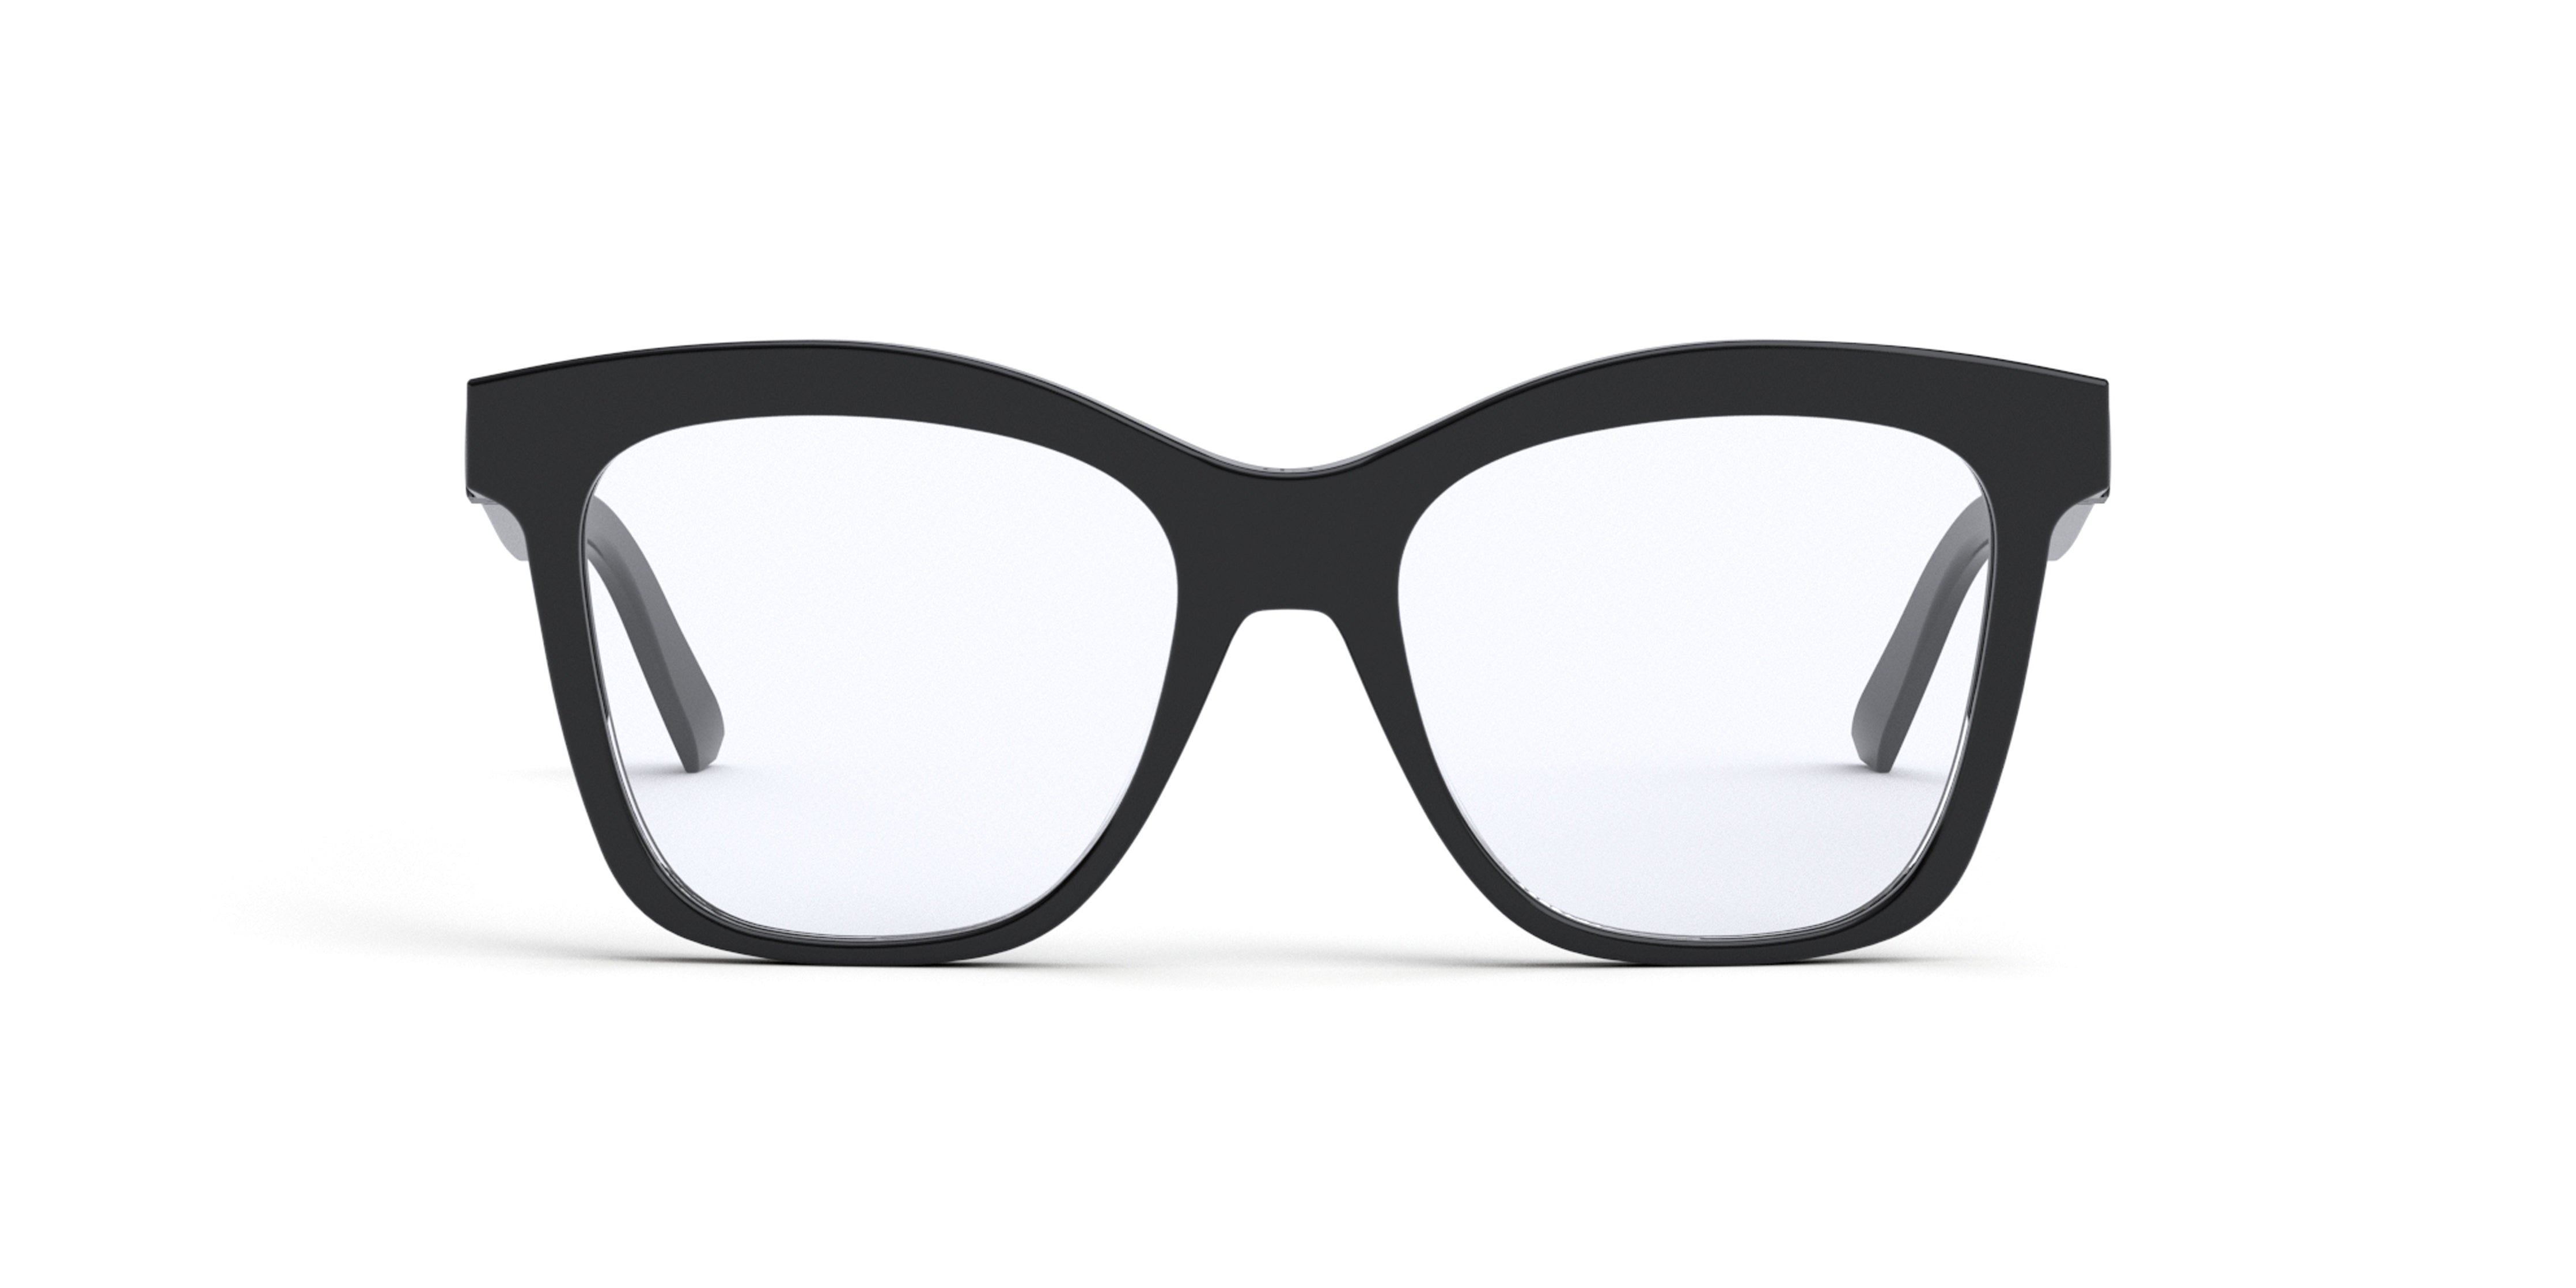 Christian Dior eye glasses eyeglasses frames CD 2892 48B 130 grepsacl